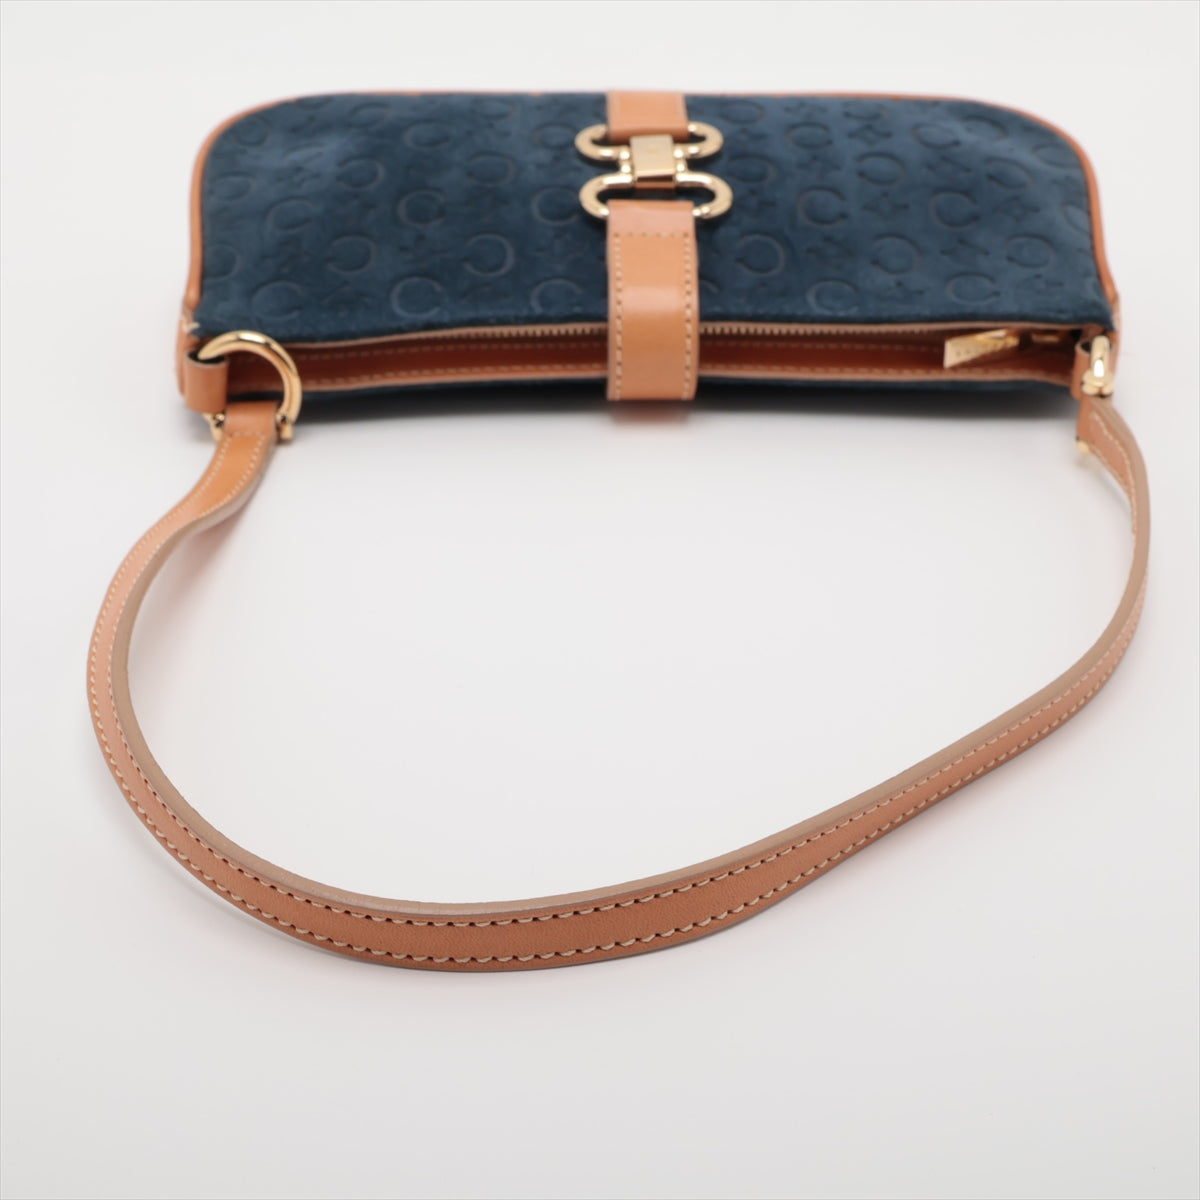 Celine C Macadam sweater leather handbag blue  brown